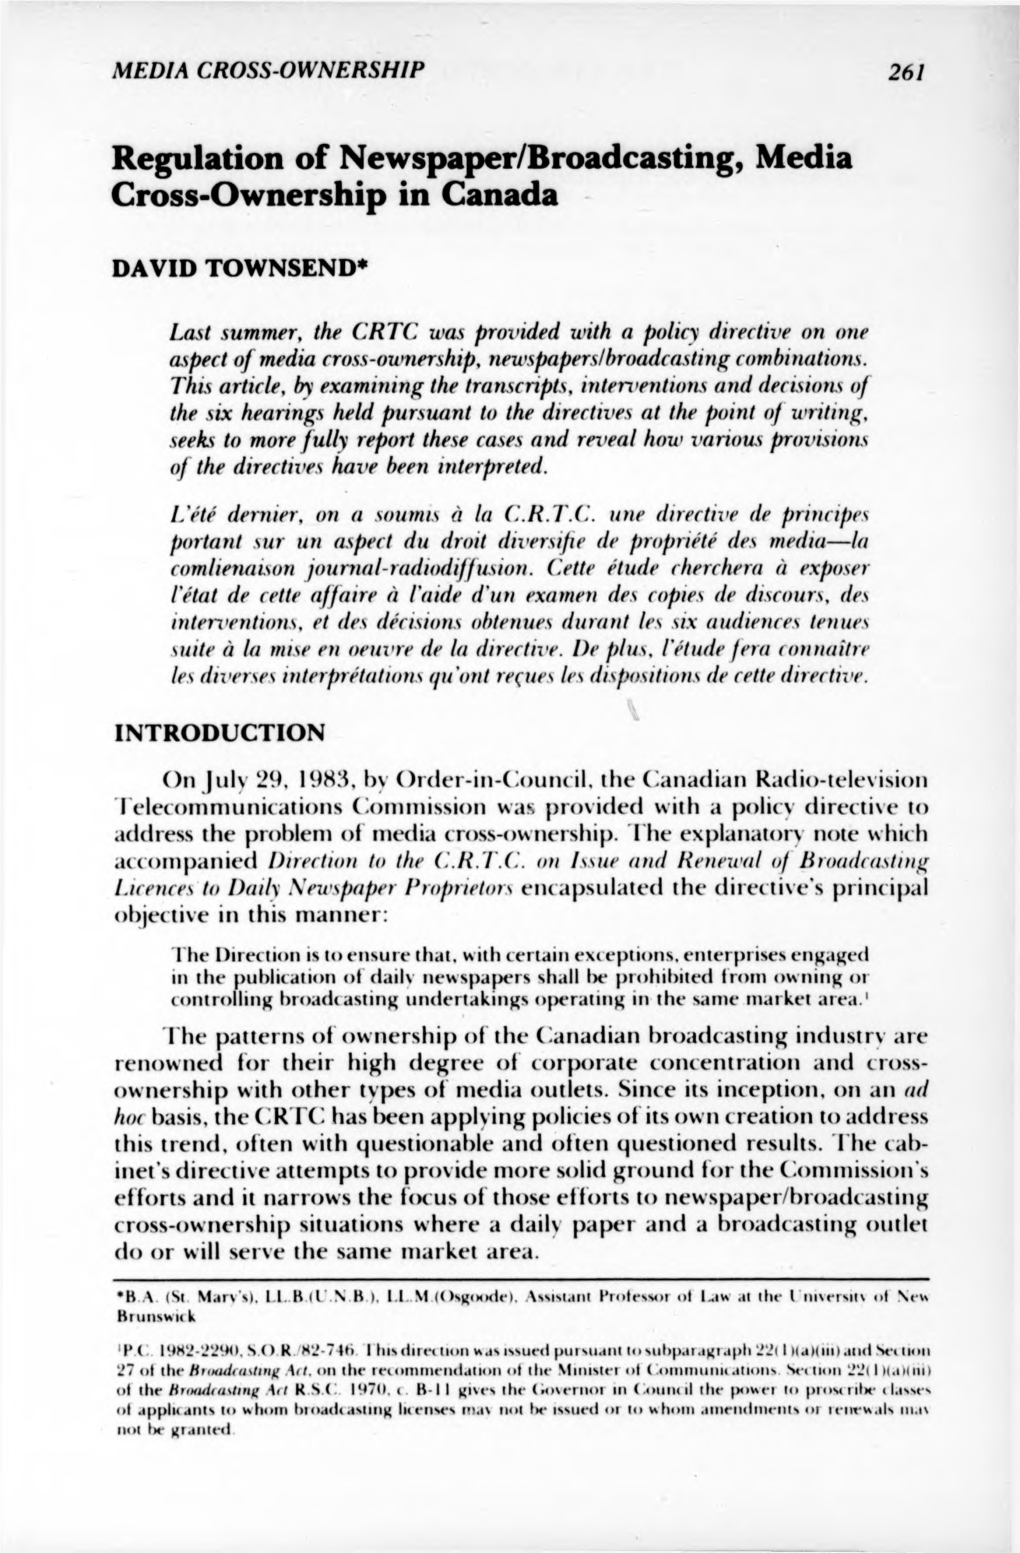 Regulation of Newspaper/Broadcasting, Media Cross-Ownership in Canada